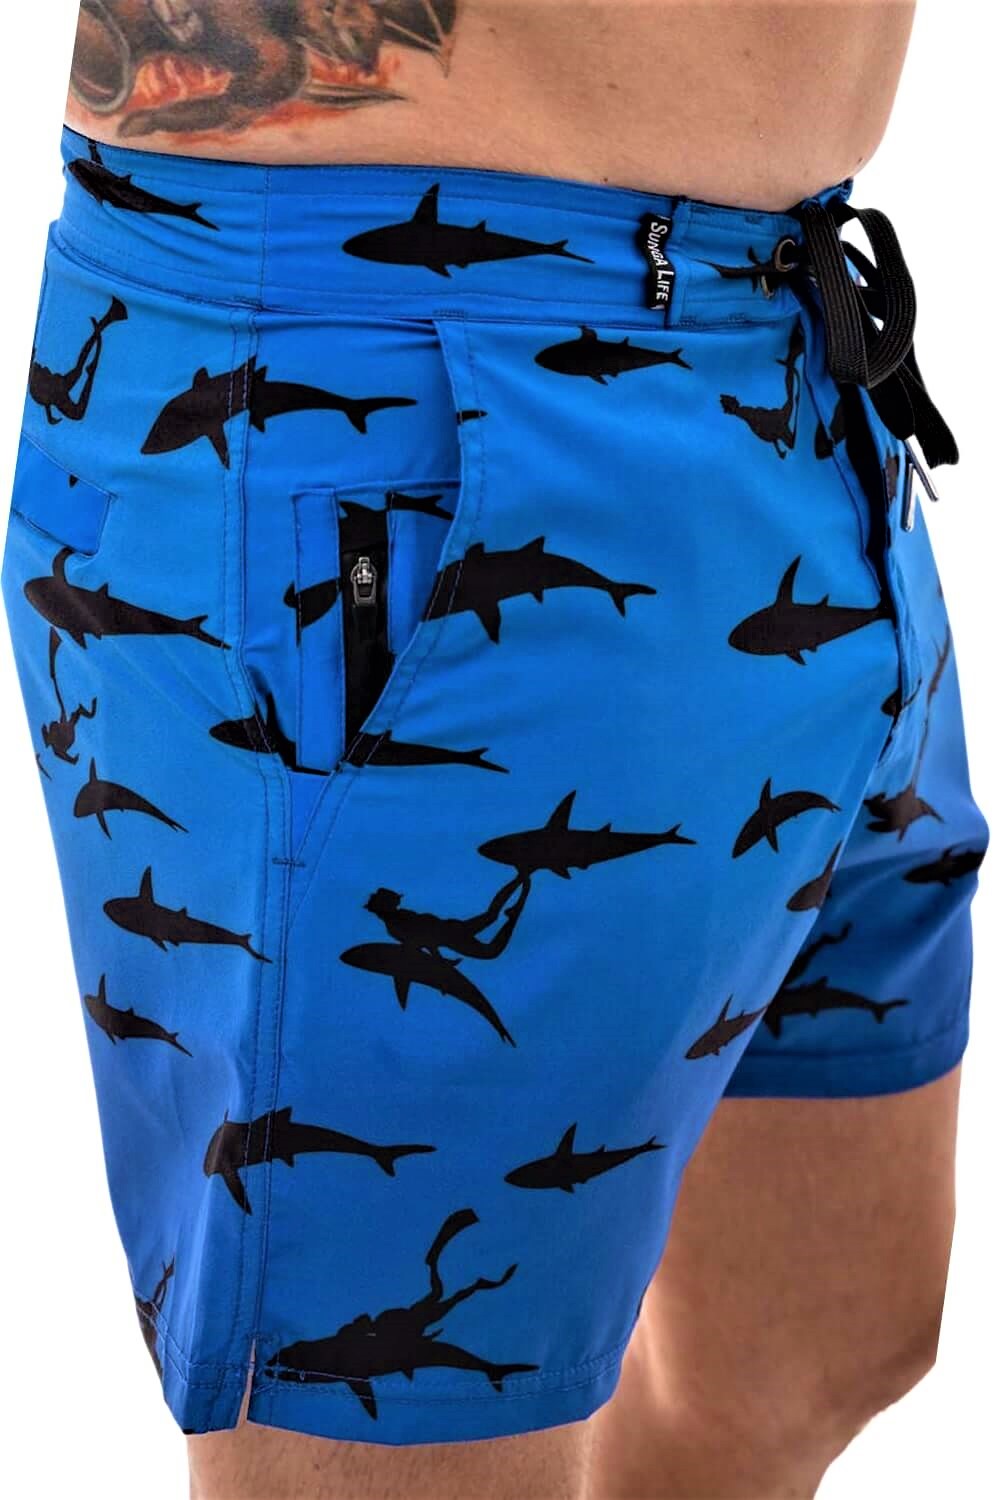 Shark & Diver Thong Bottom, Blue String Bikini - Sunga Life